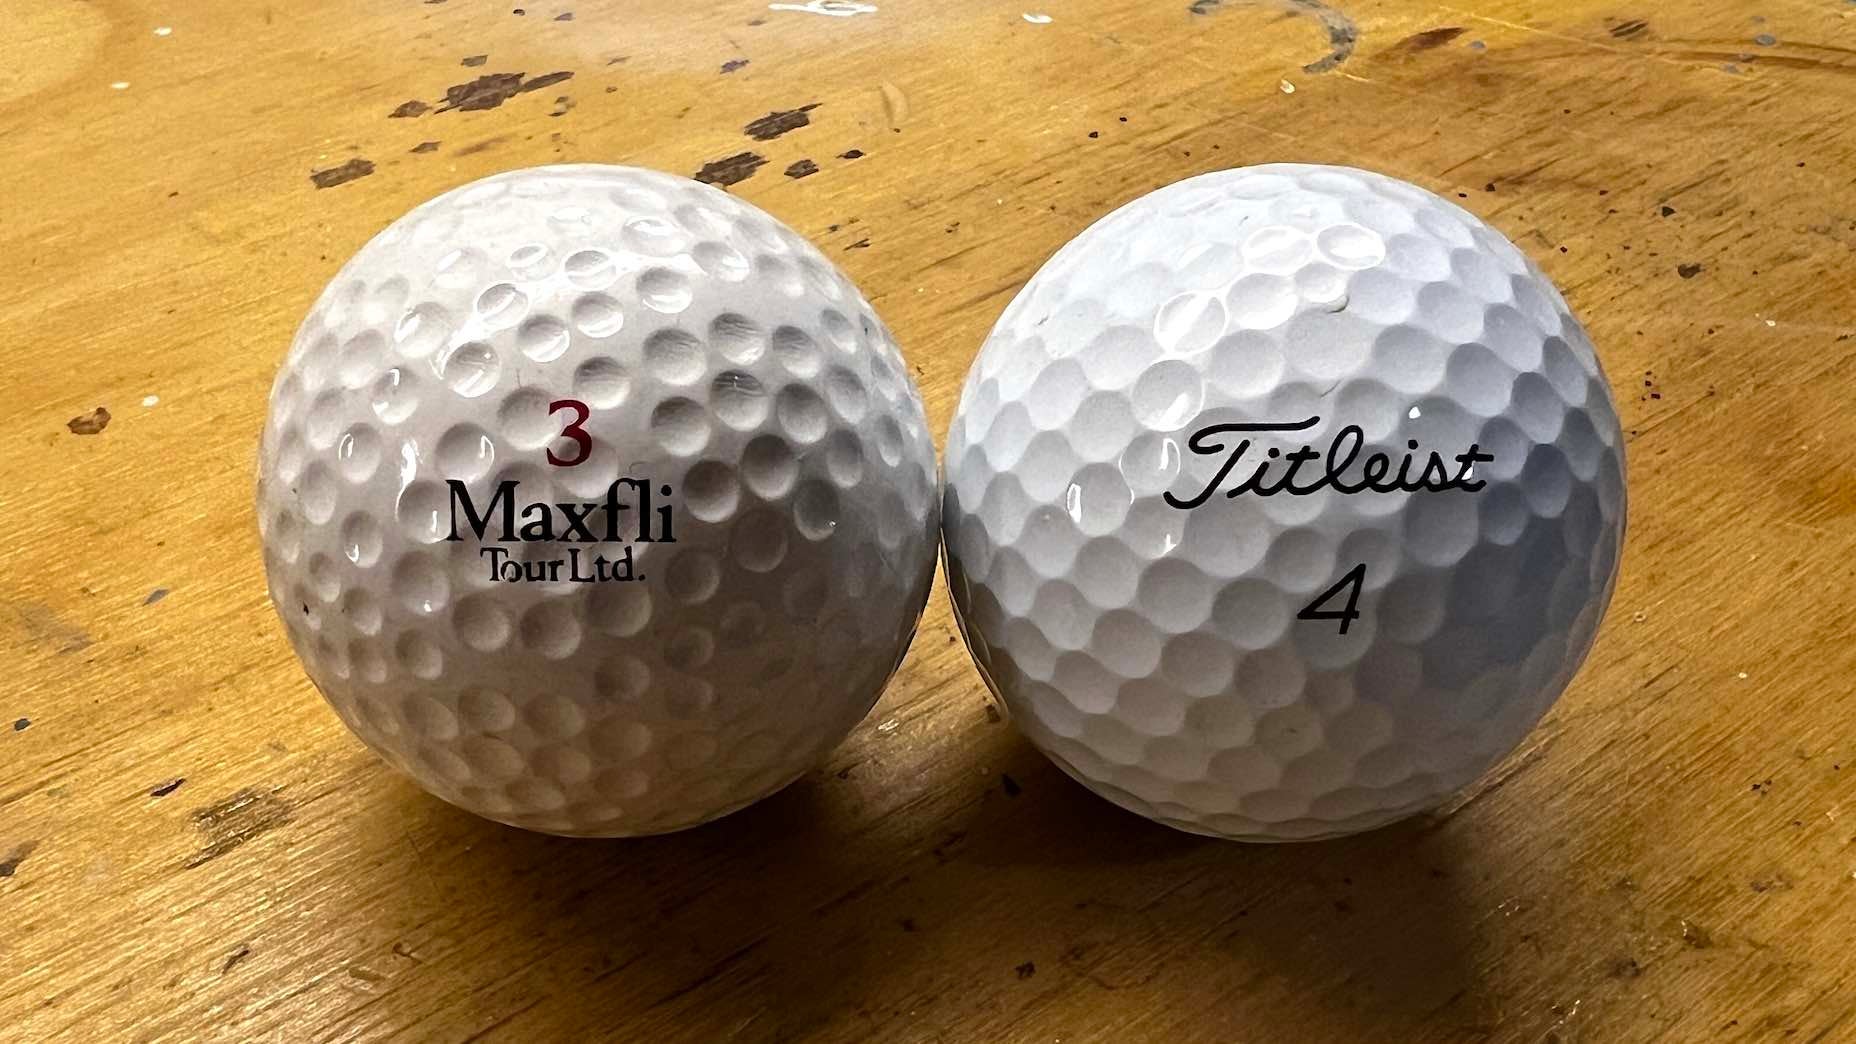 old "small golf ball" vs the new "modern" golf ball